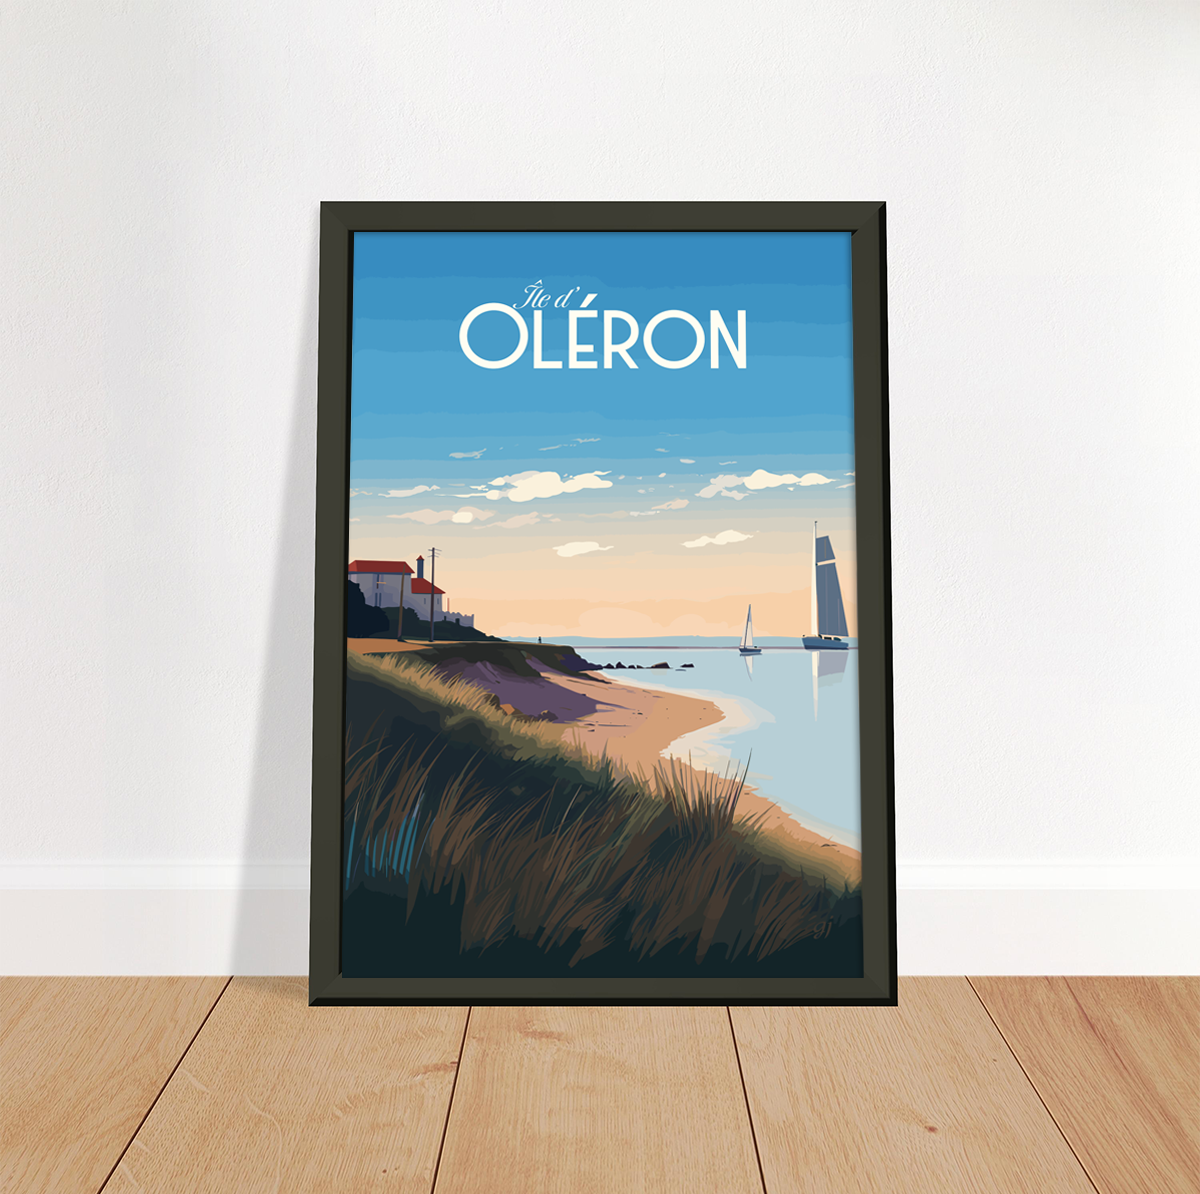 Oléron - Plage poster by bon voyage design